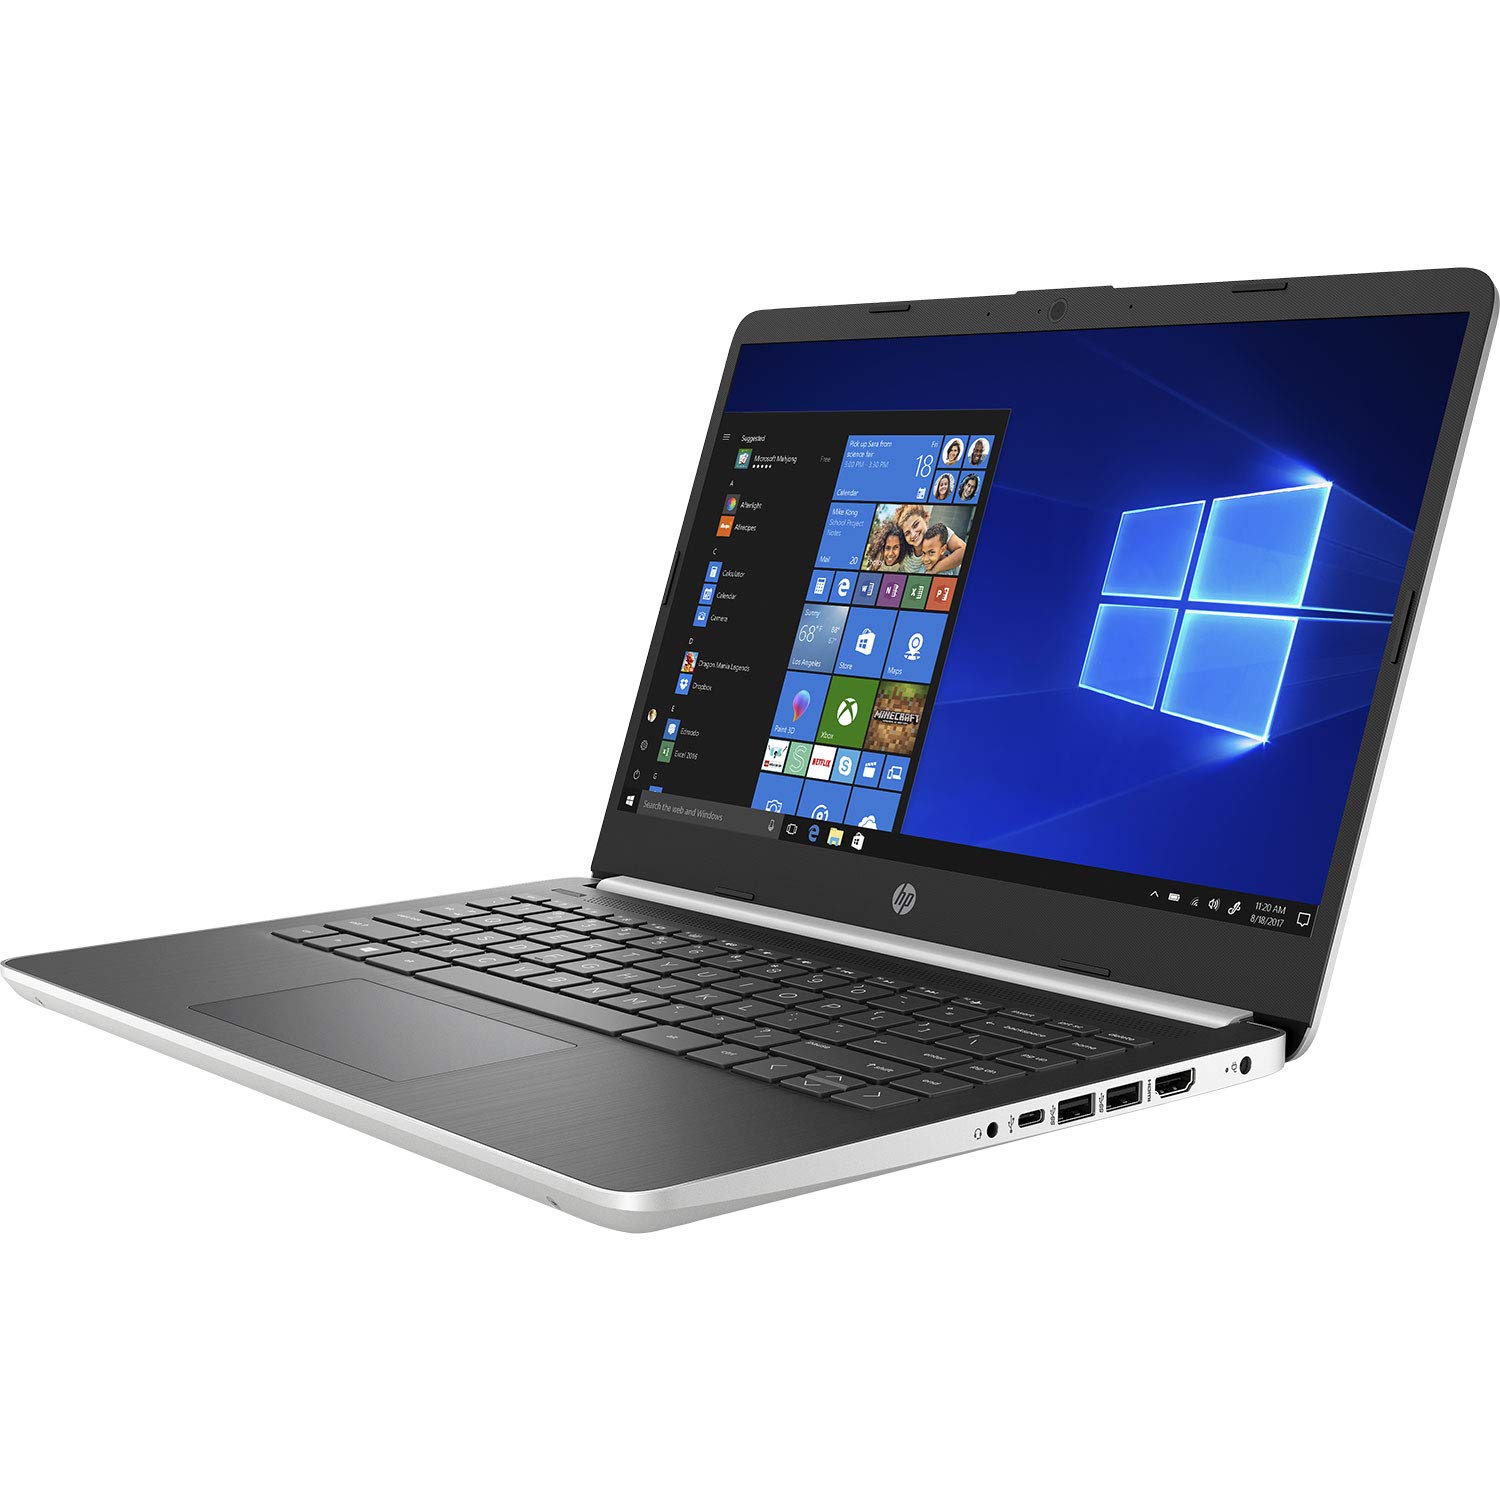 348 G7 Notebook PC